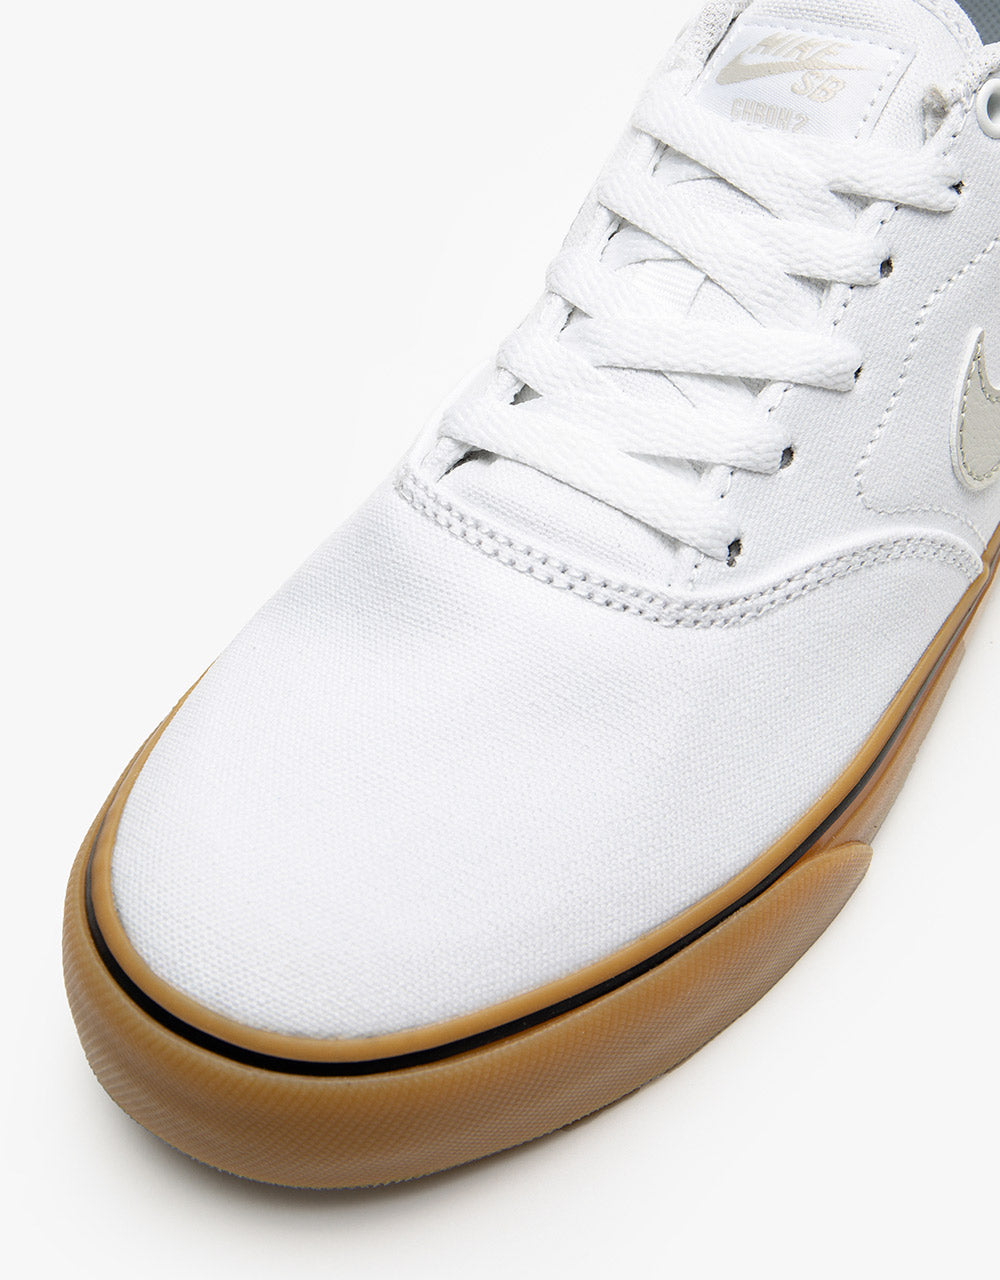 Nike SB Chron 2 Canvas Skate Shoes - White/Light Bone-White-Gum Light Brown